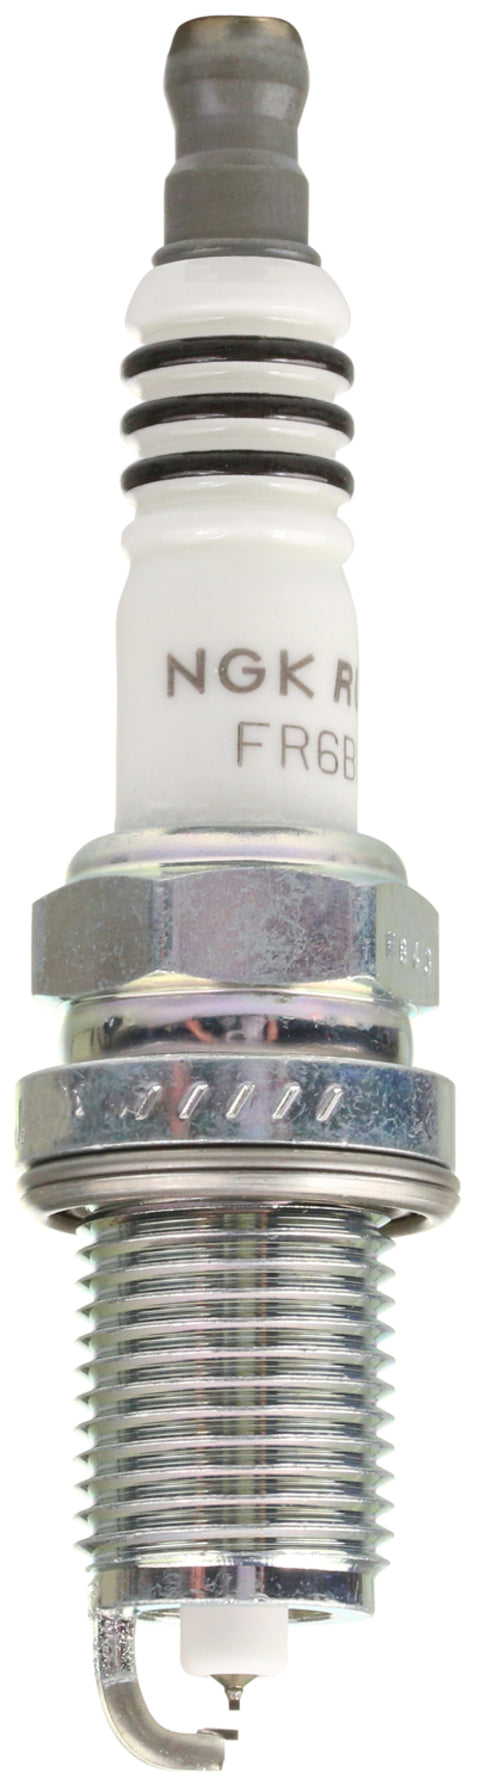 NGK Ruthenium HX Spark Plug Box of 4 (FR6BHX-S)